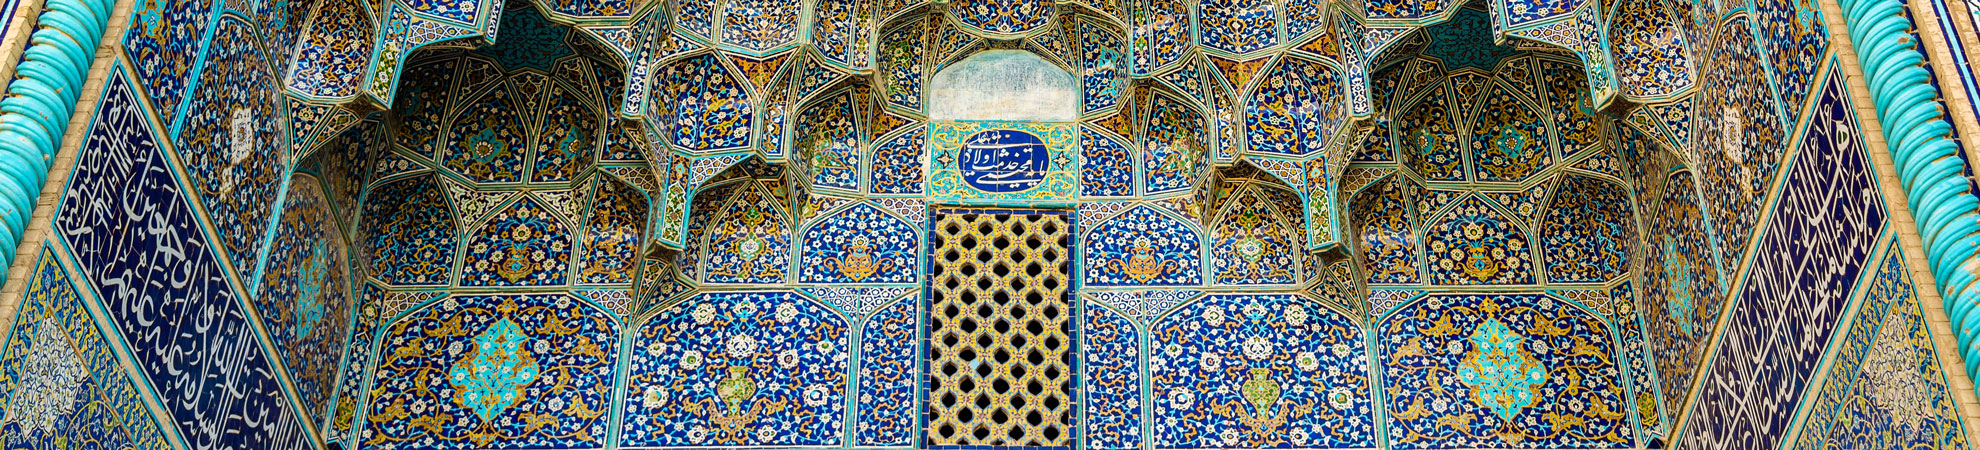 Visa Iran